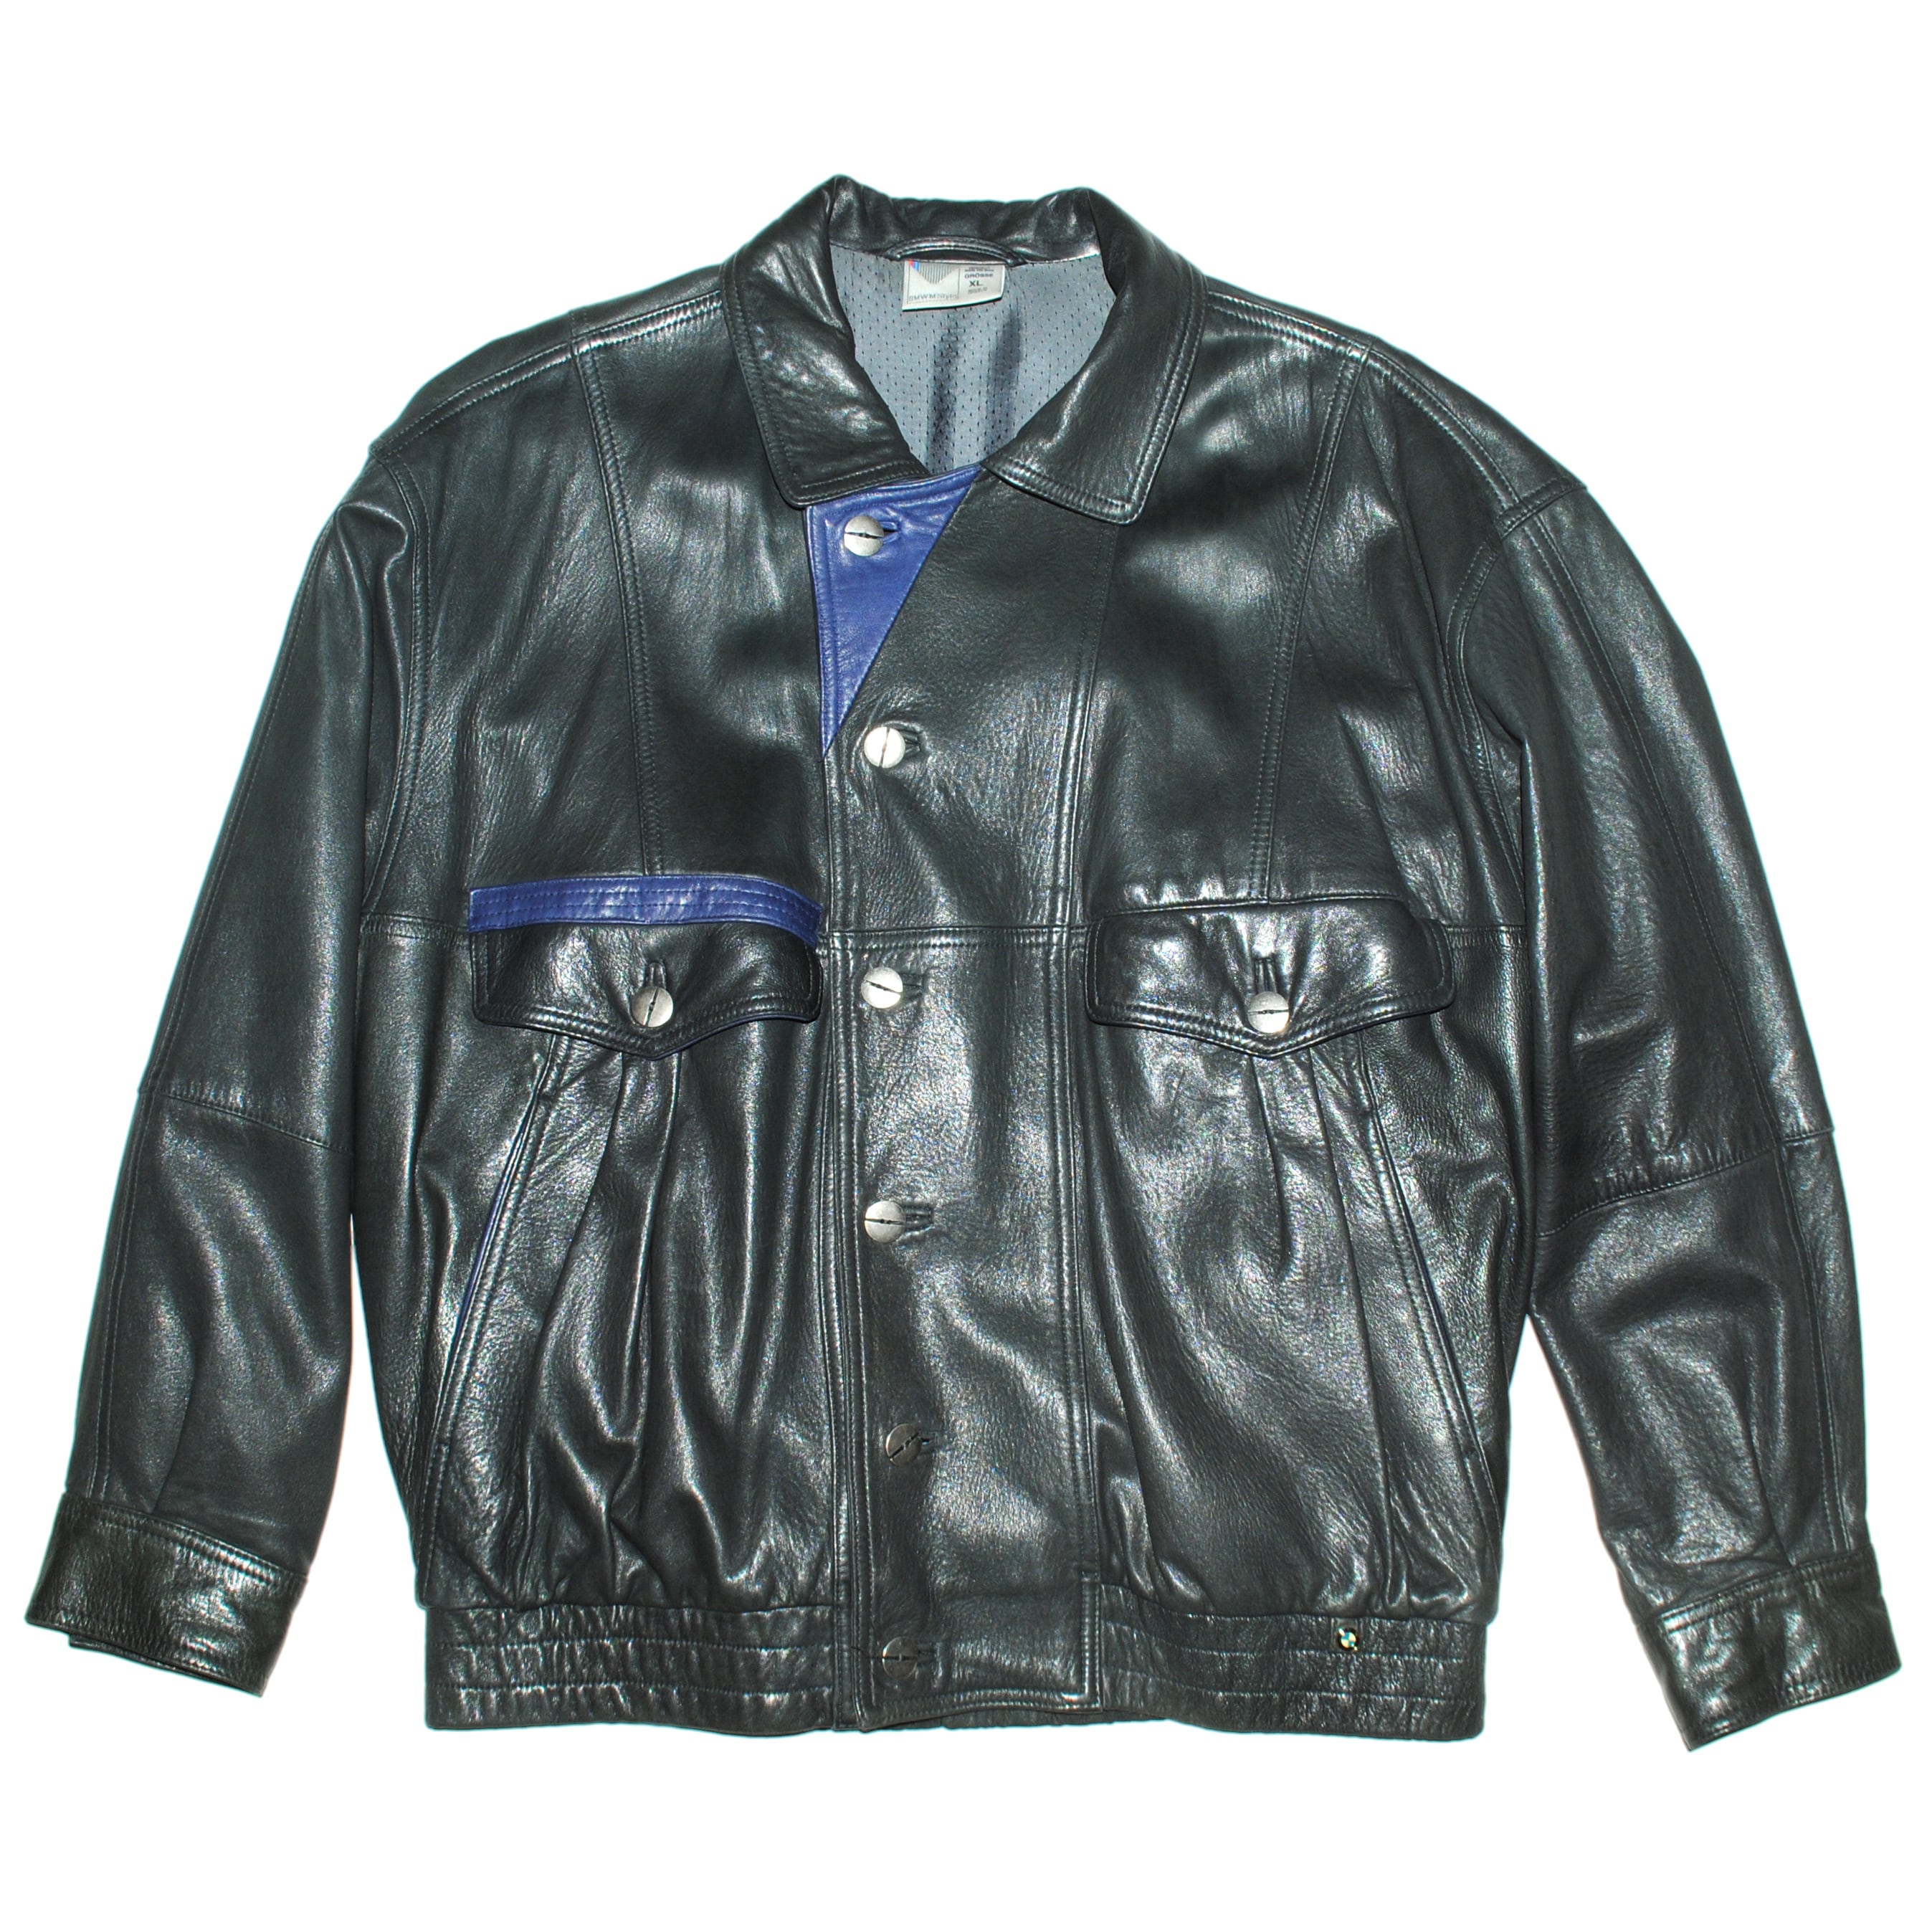 90s vintage leather jacket